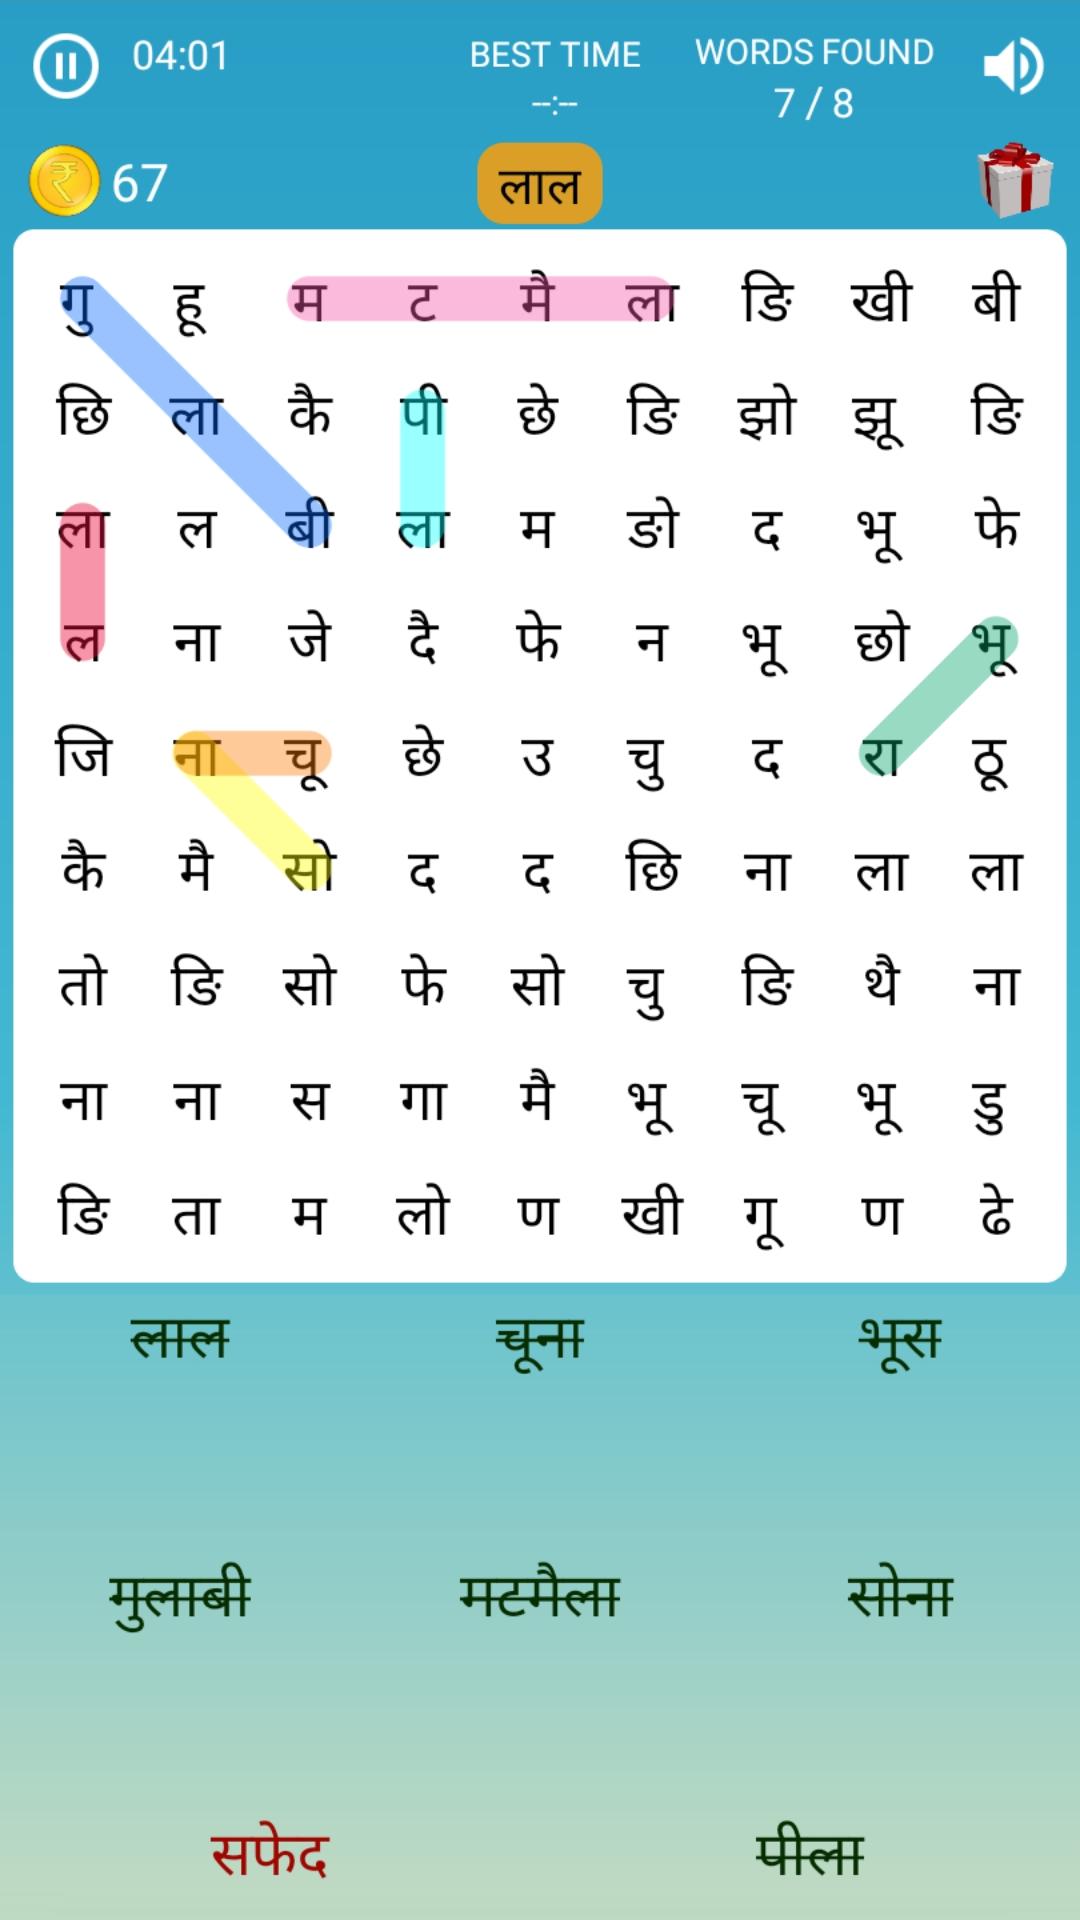 Hindi Word Search Game 2.2 Screenshot 14